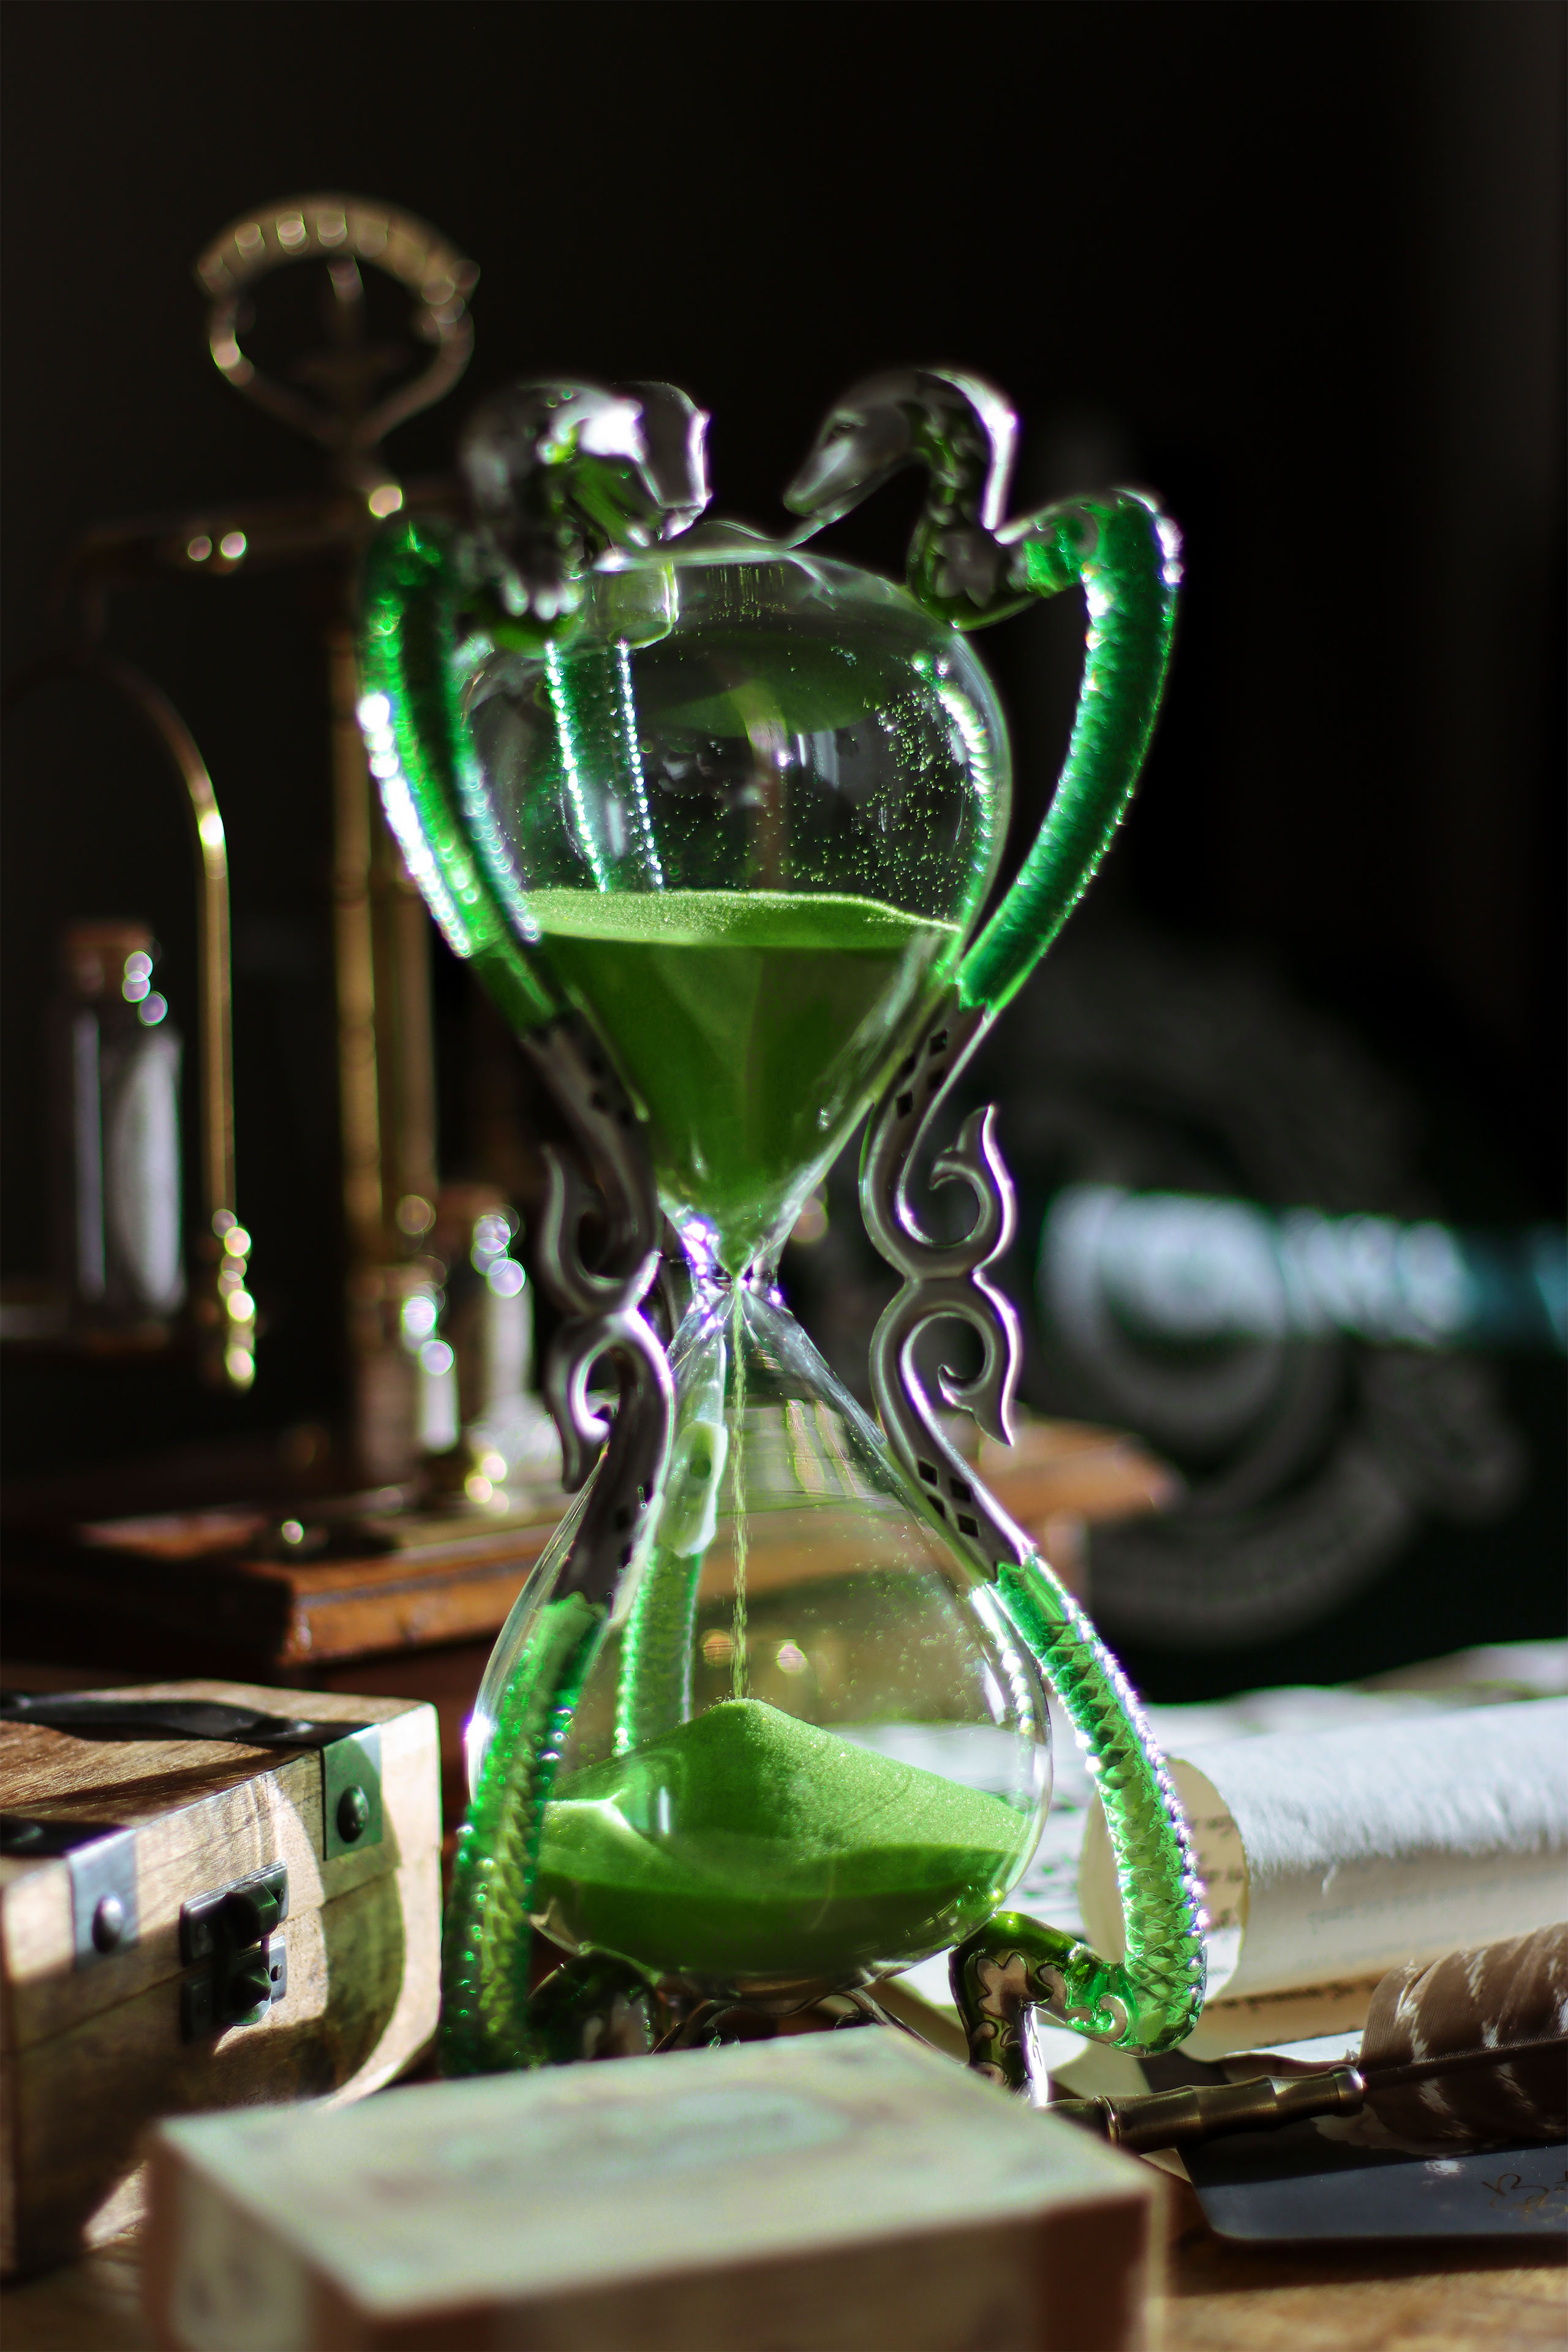 Harry Potter - Prof. Slughorn's Hourglass